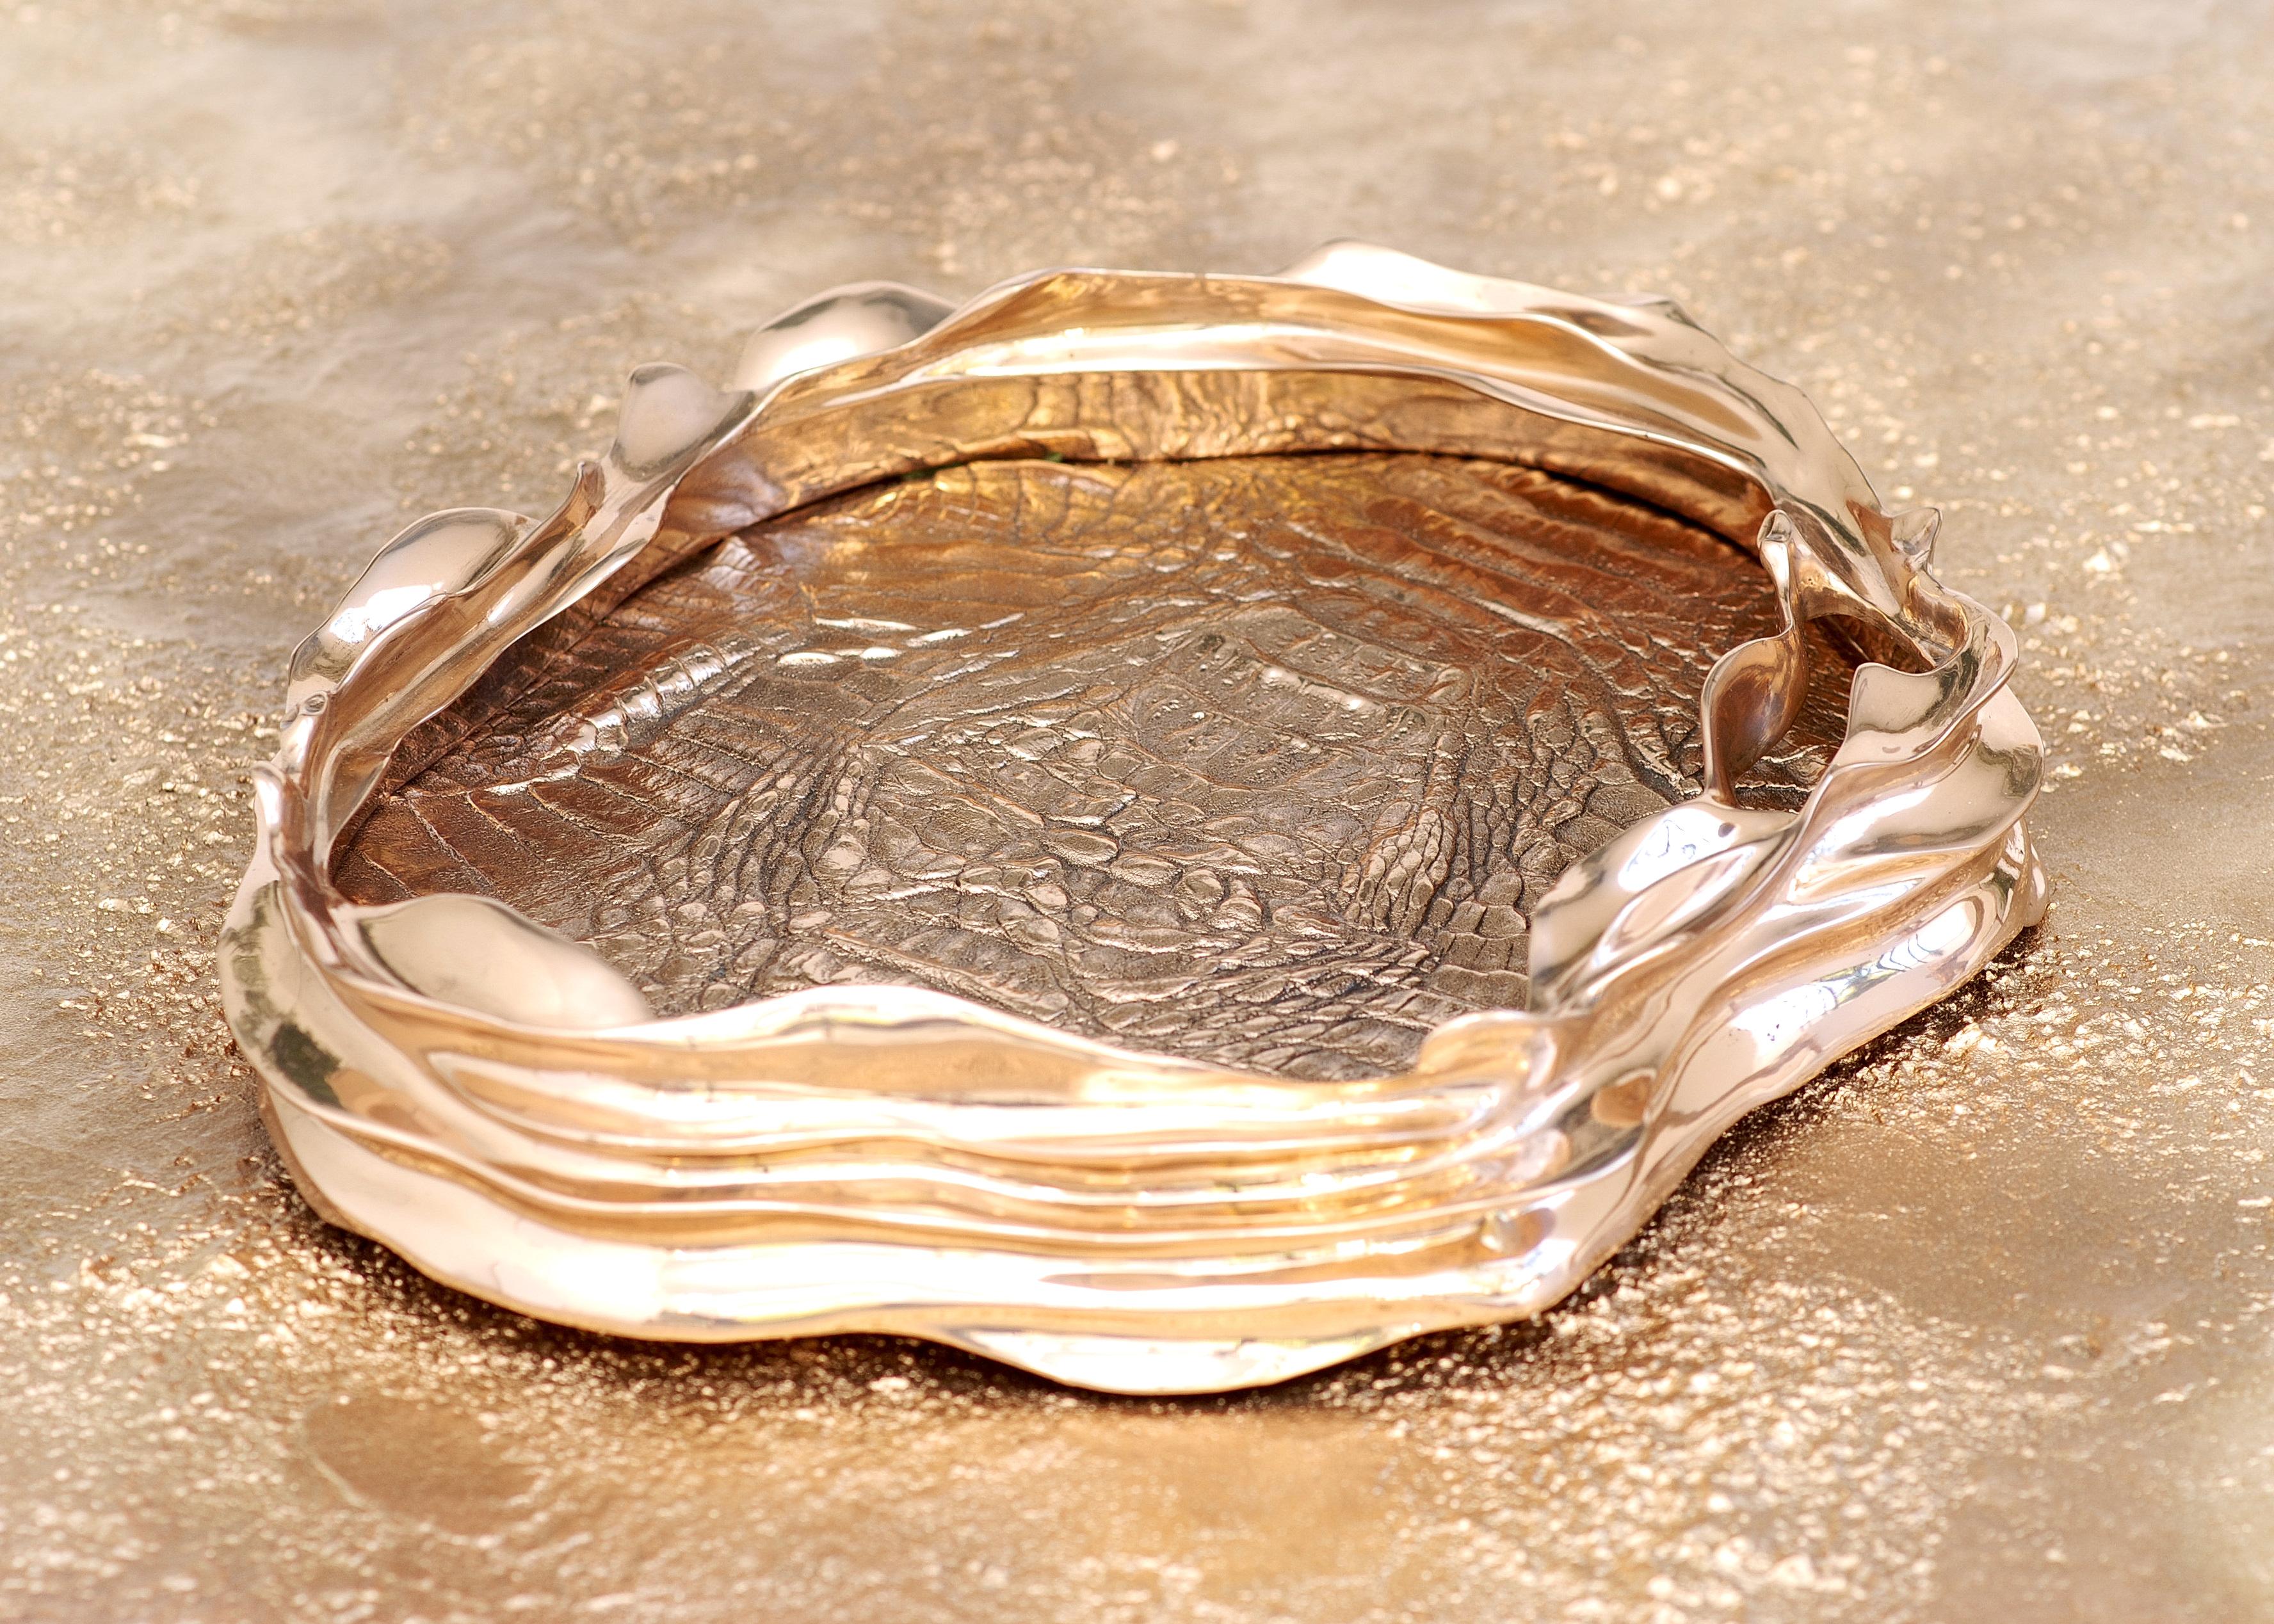 Brazilian Centerpiece Bowl in Polished Bronze by FAKASAKA Design